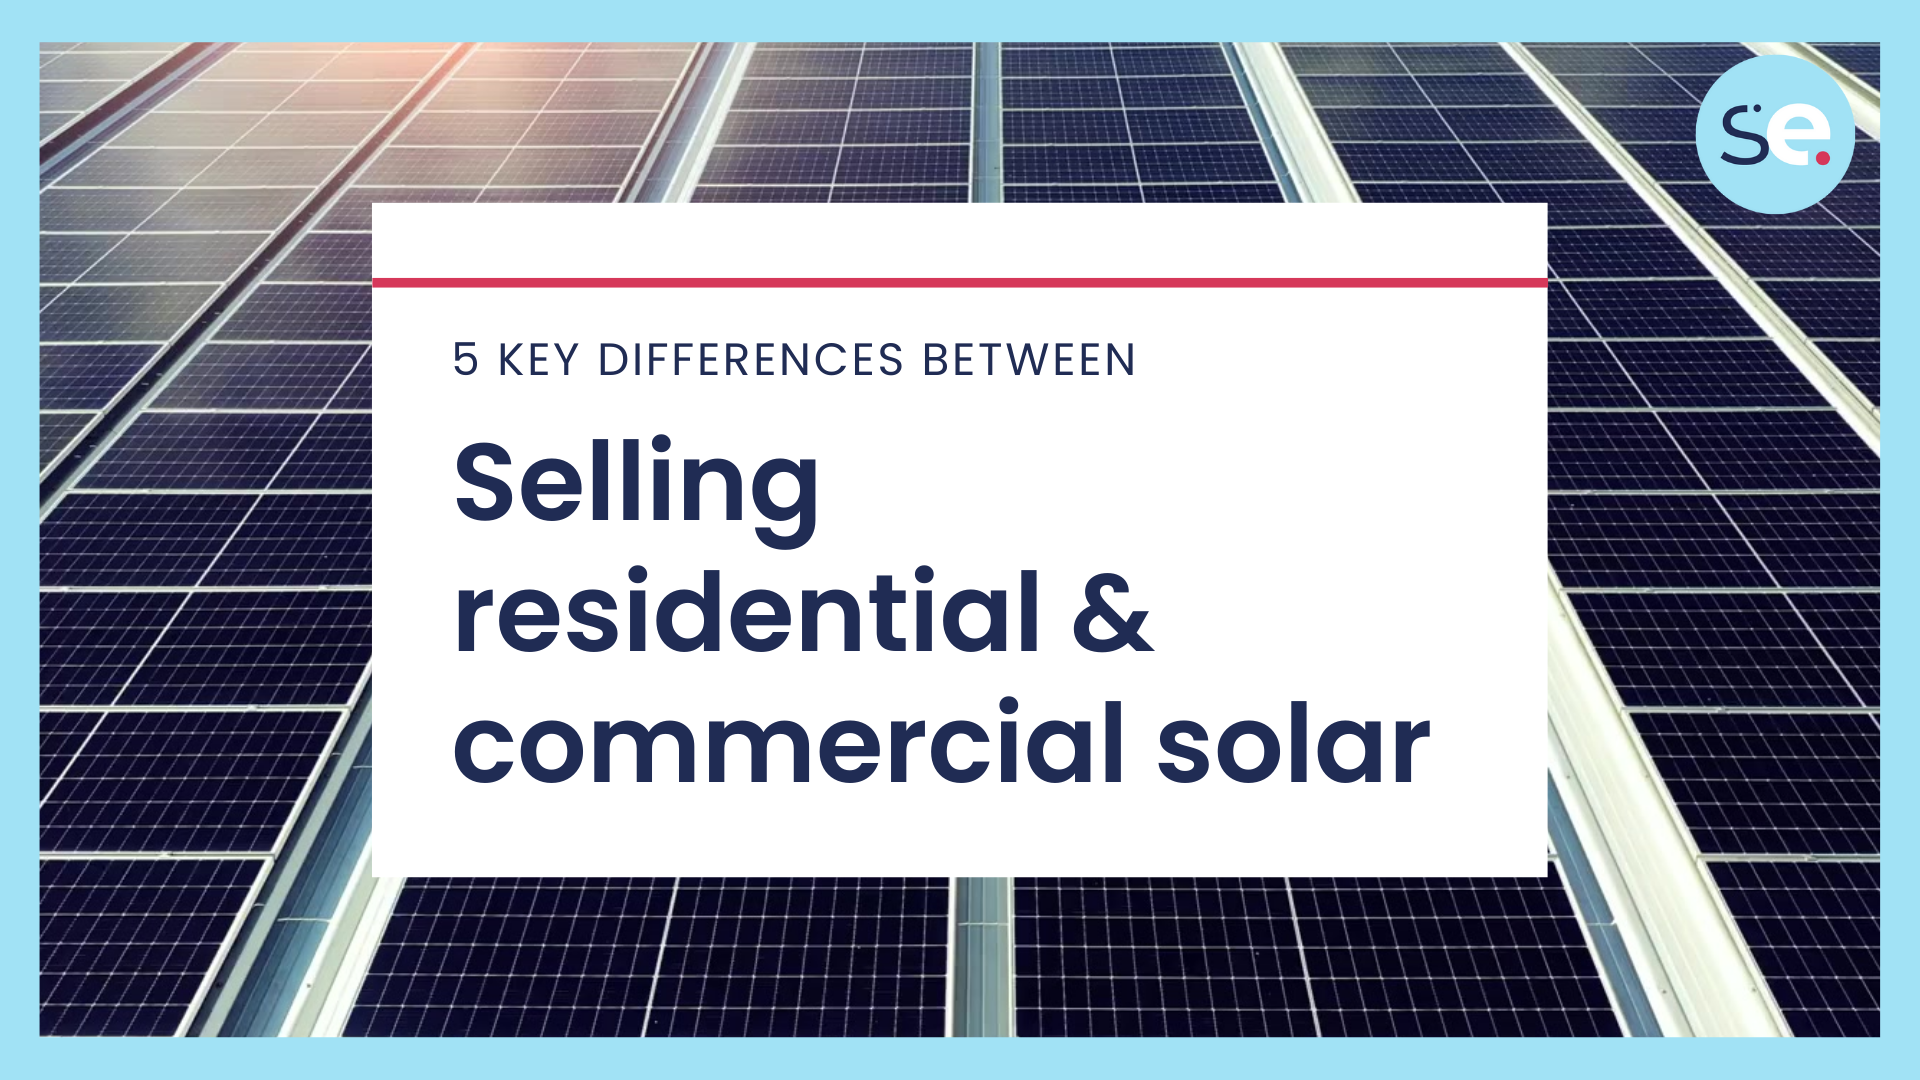 Selling residential vs selling commercial solar